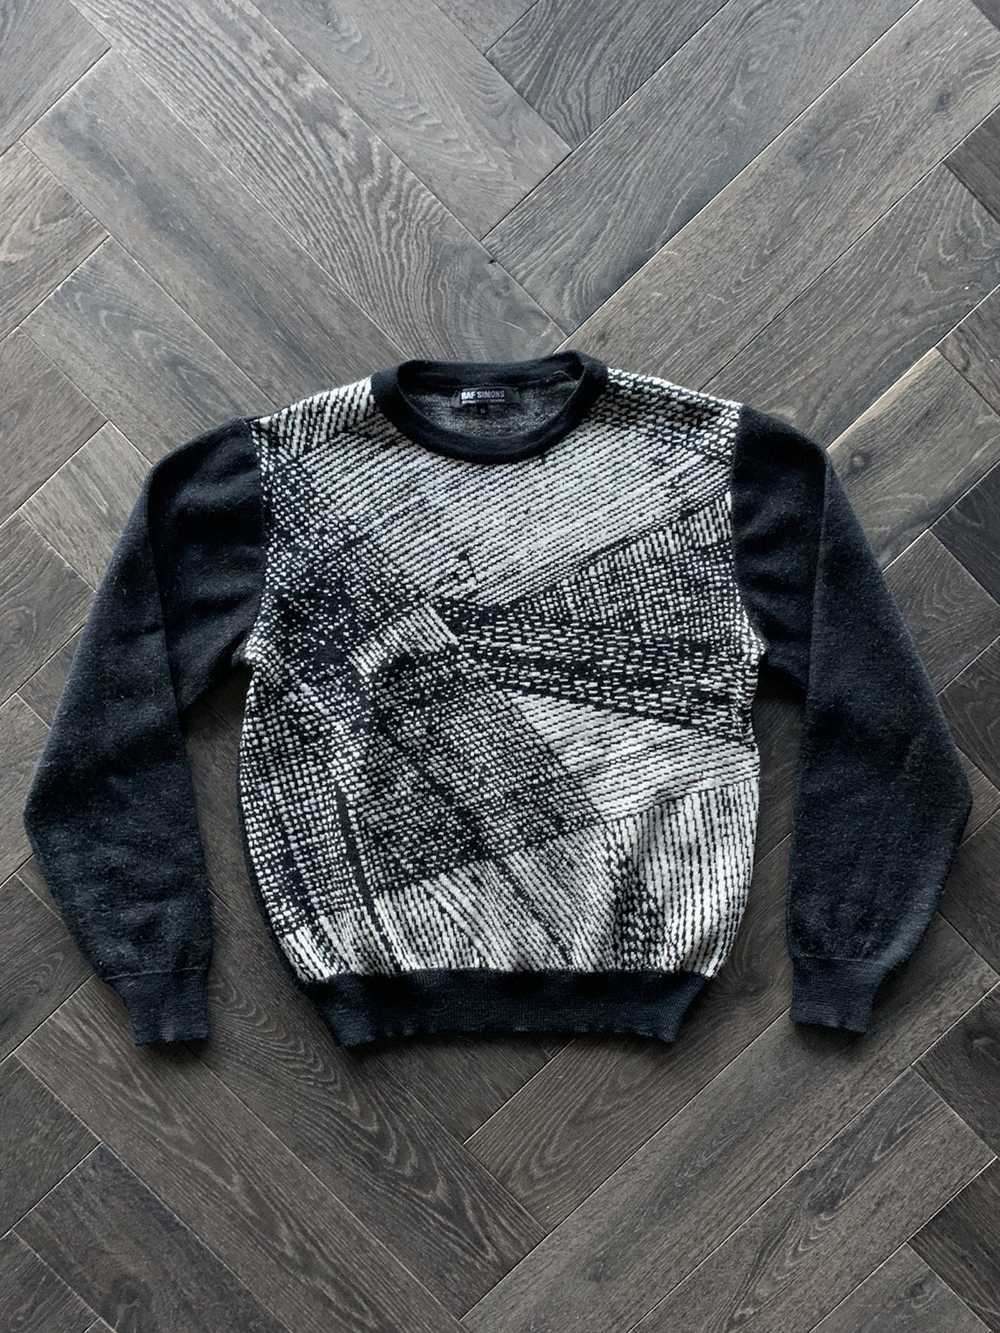 Raf Simons AW03 Intarsia Knit Sweater - image 1